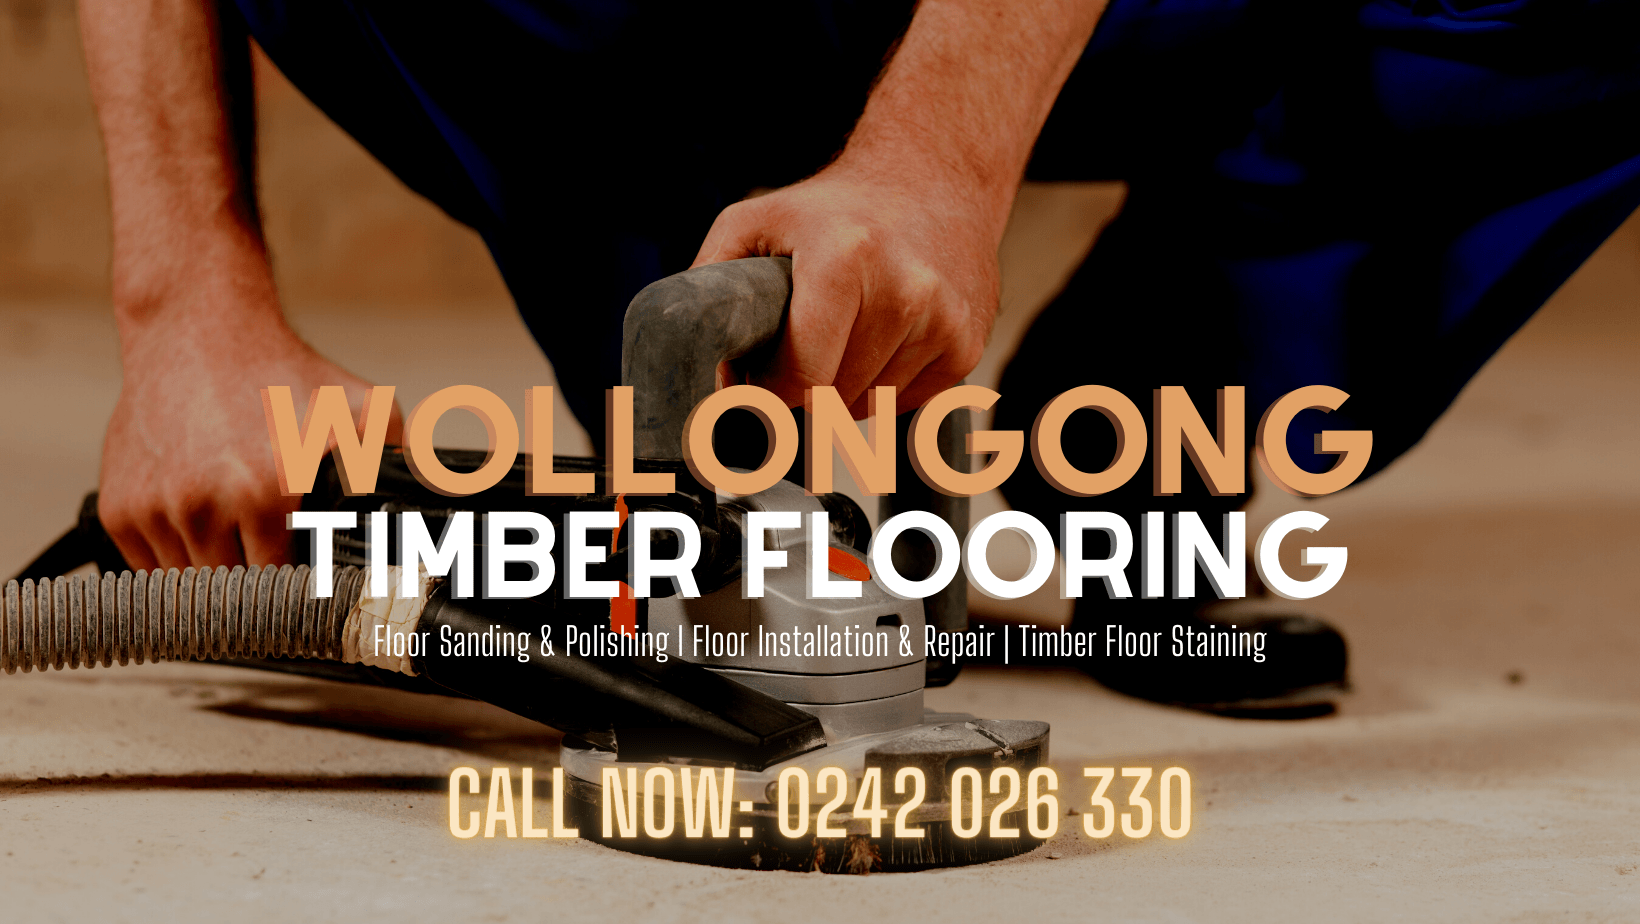 Wollongong timber flooring contact details